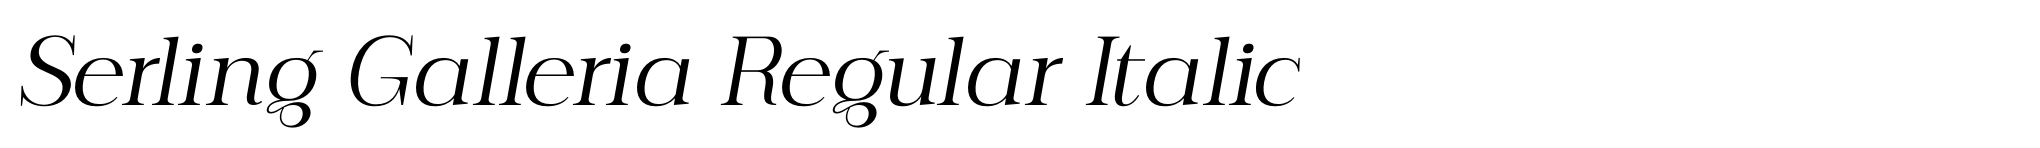 Serling Galleria Regular Italic image